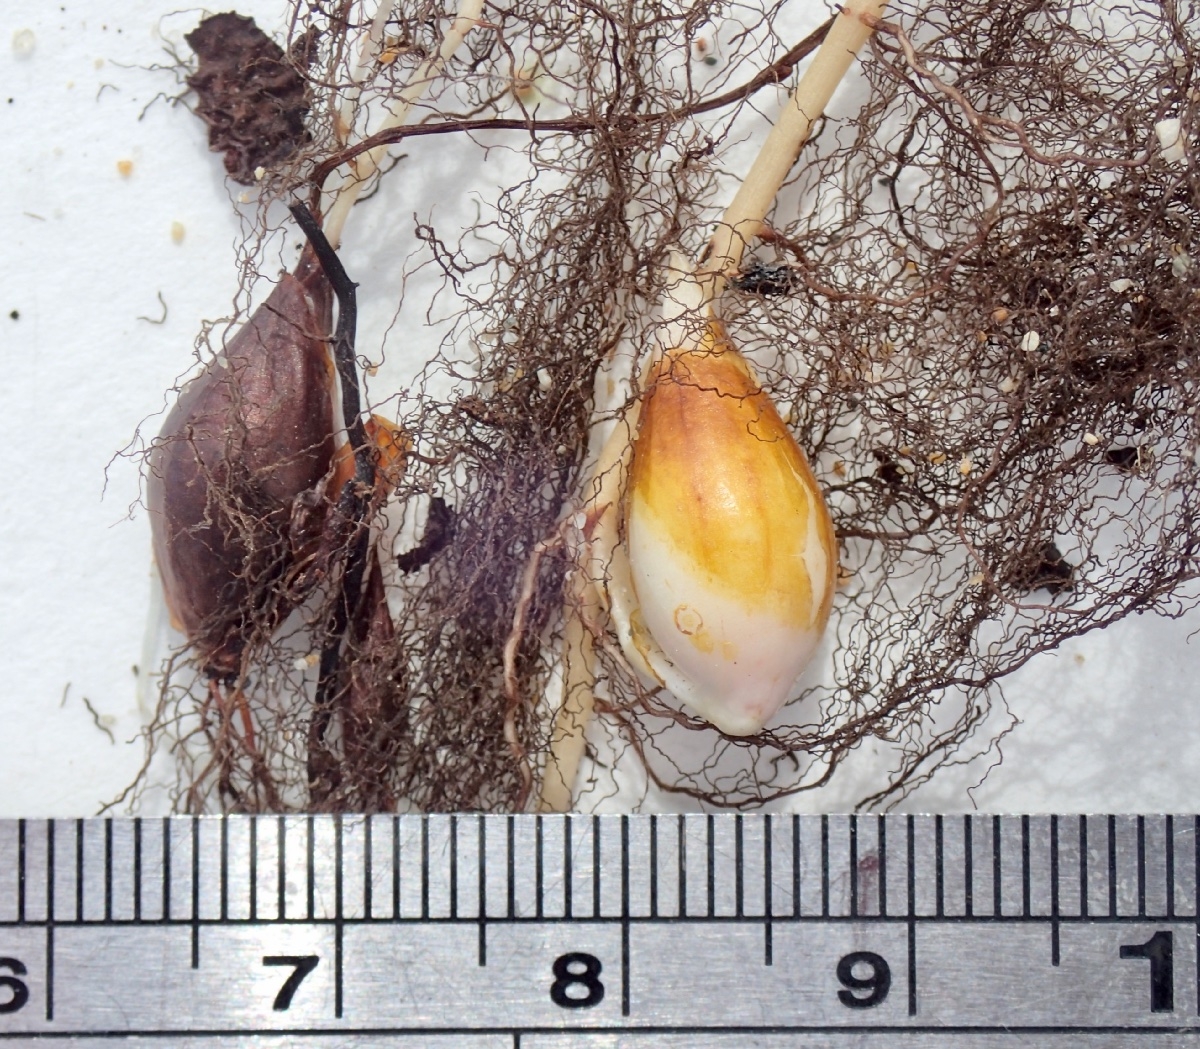 Oxalis purpurea